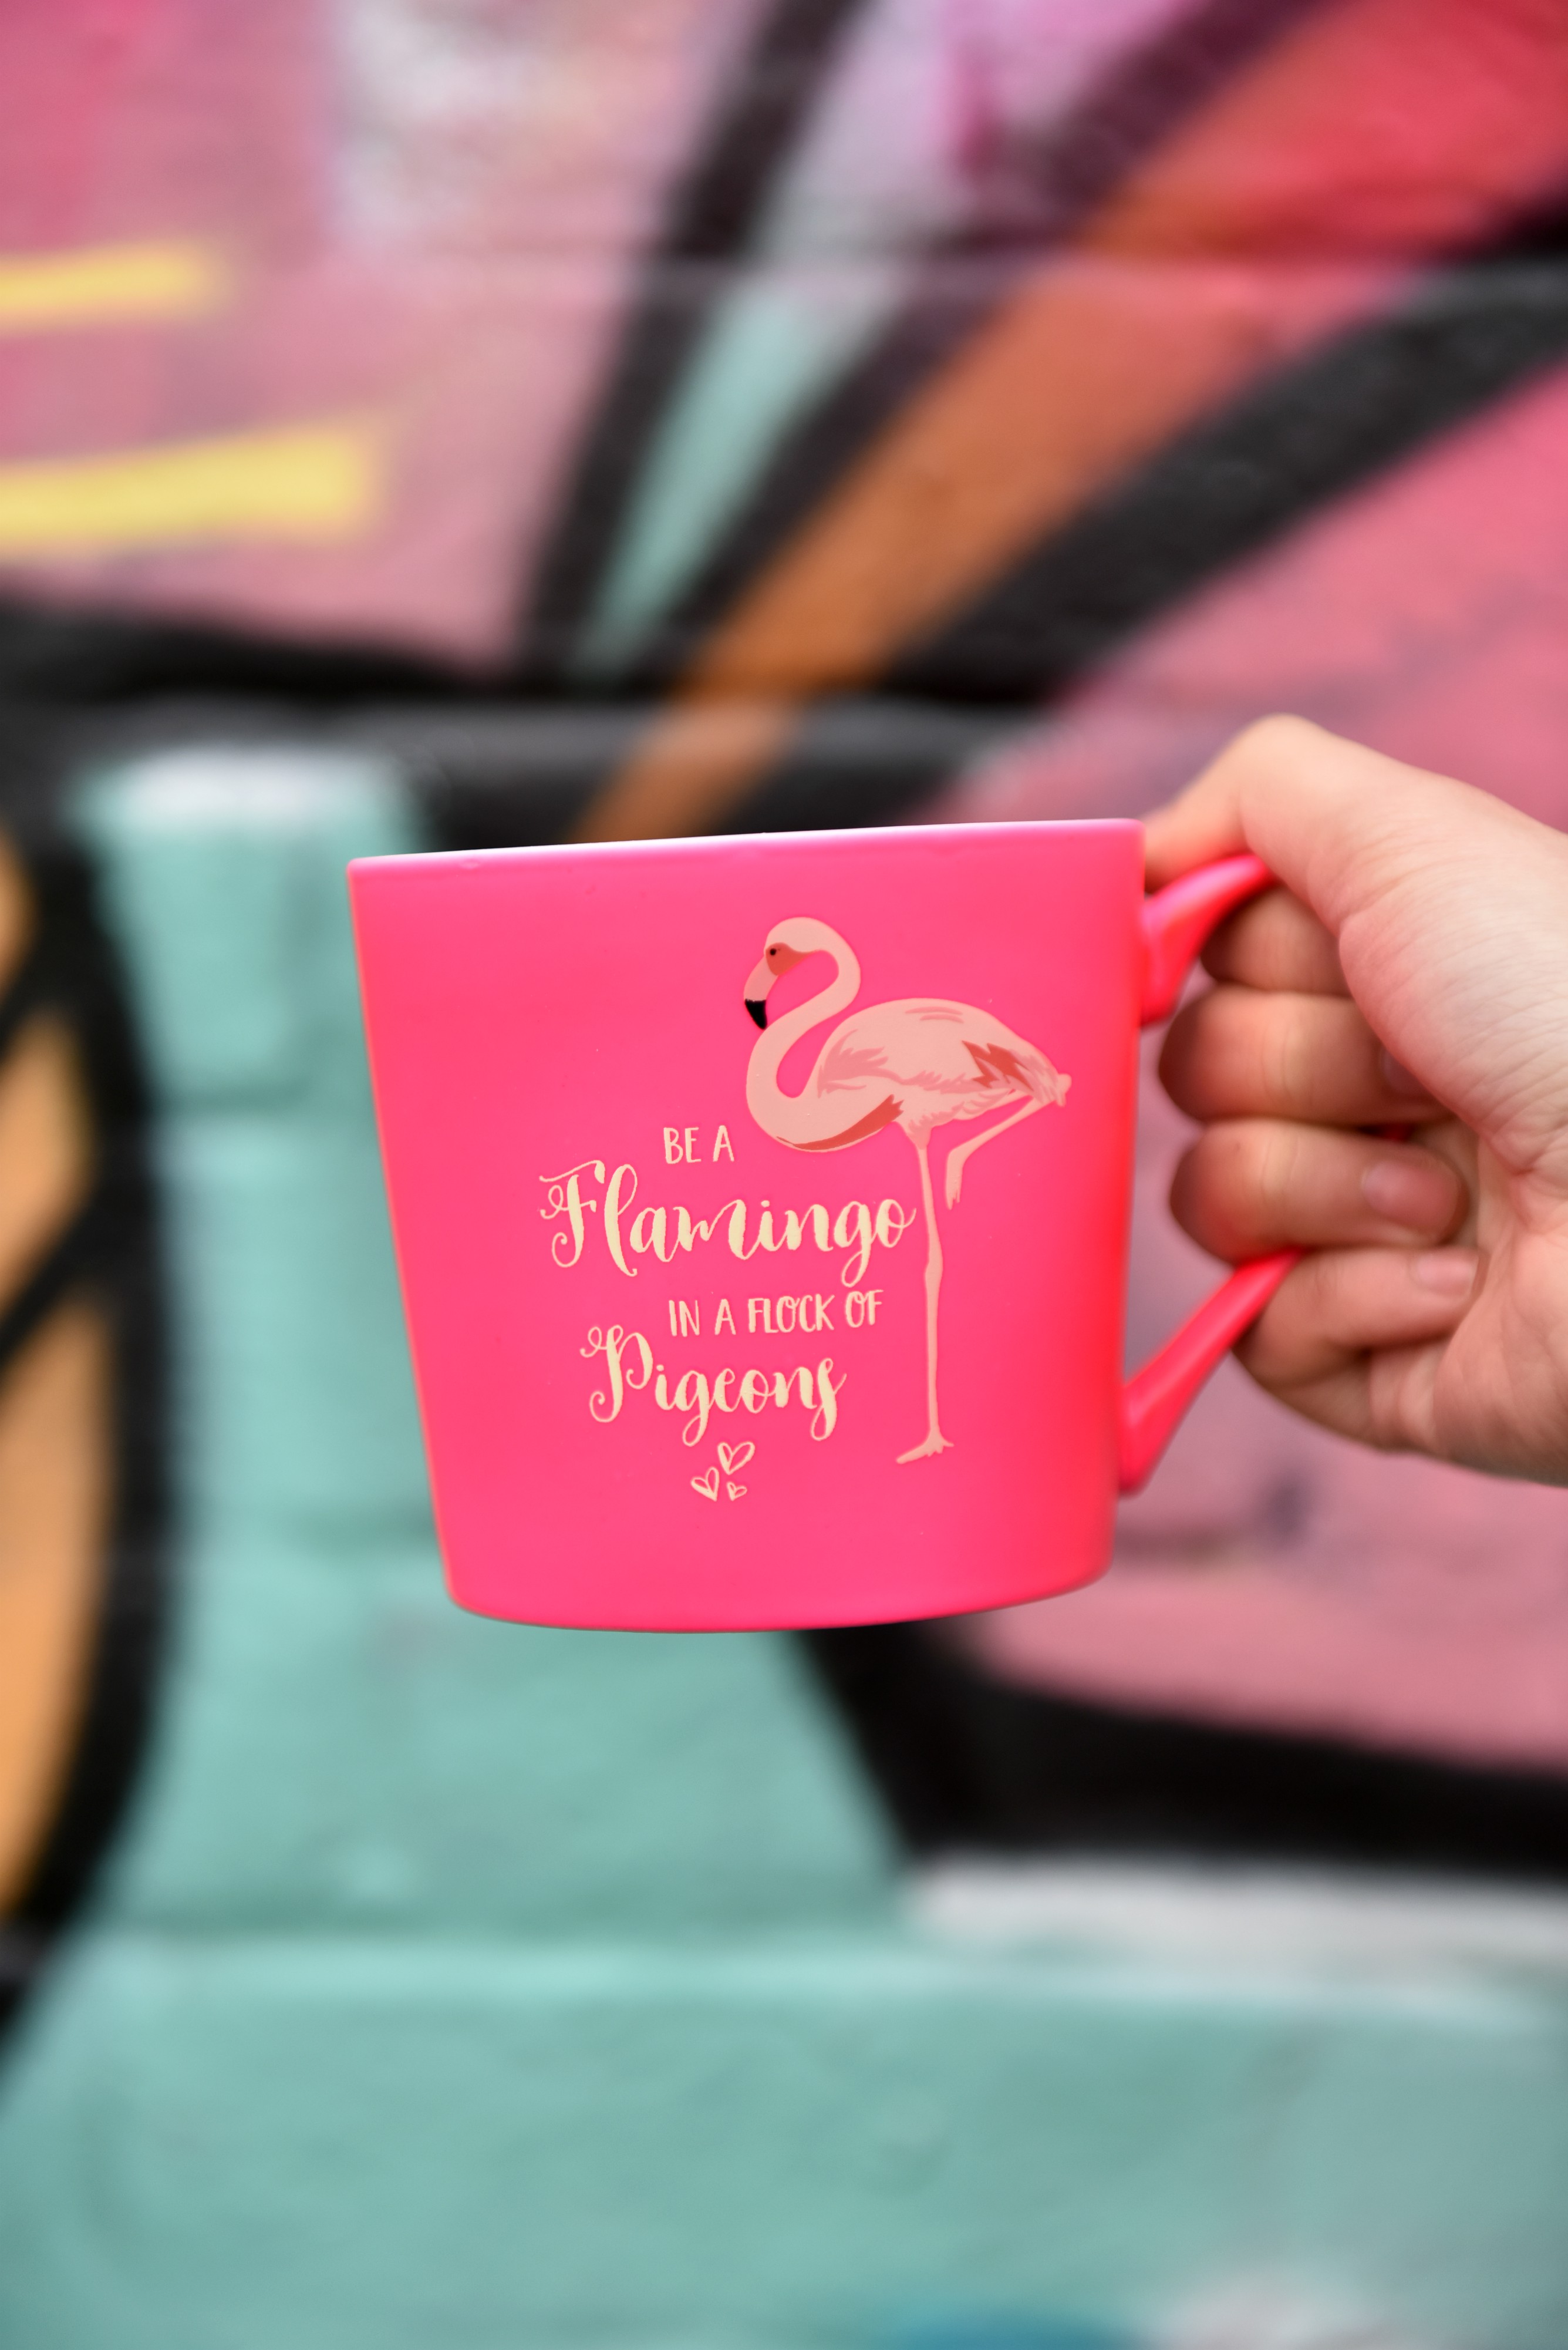 <img src="ana.jpg" alt="ana flamingo quote mug mothers day"/> 